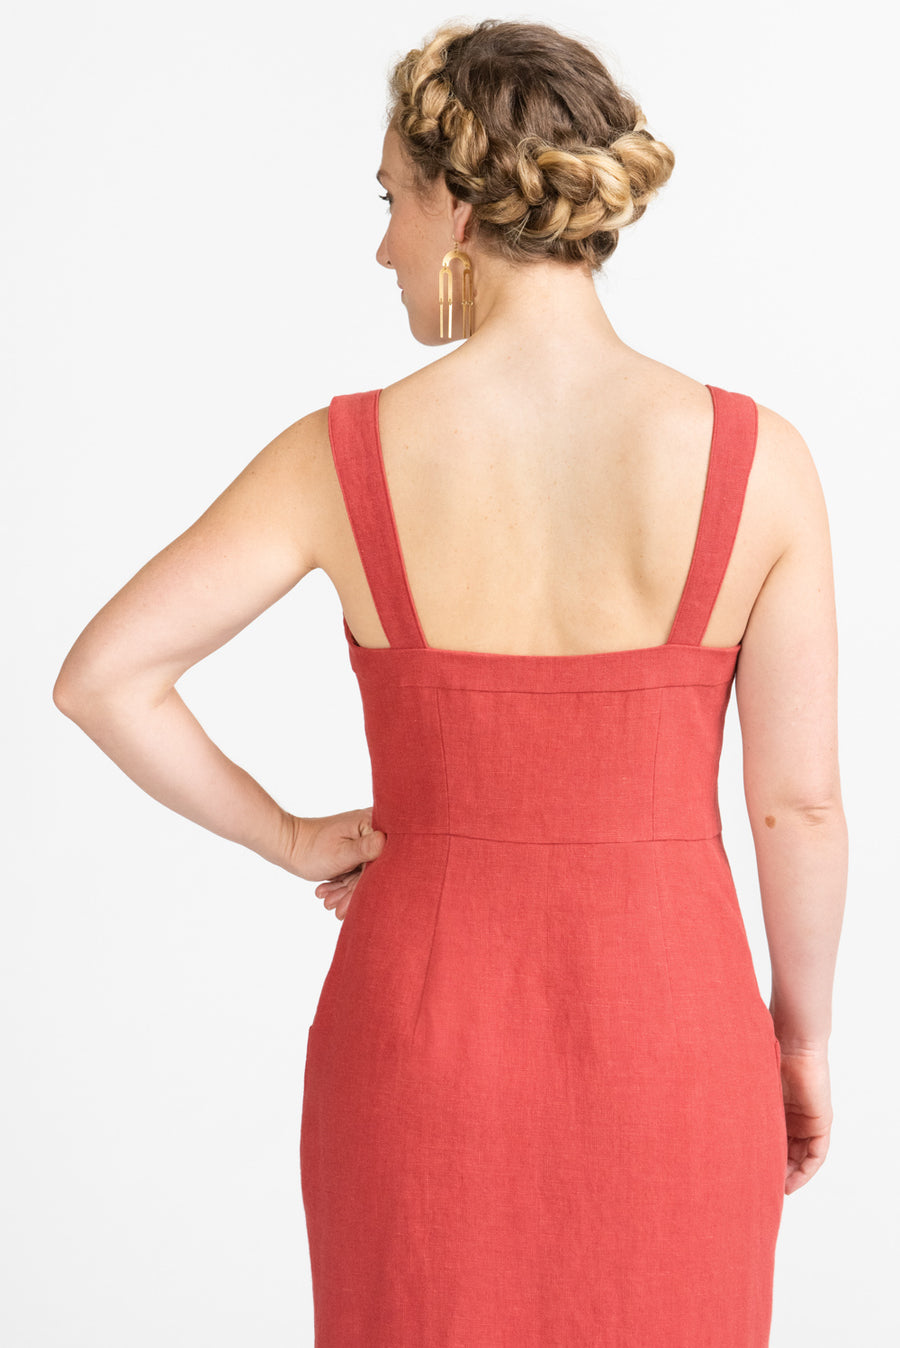 Fiona Sundress Pattern // Princess seamed summer dress pattern // Closet Core Patterns